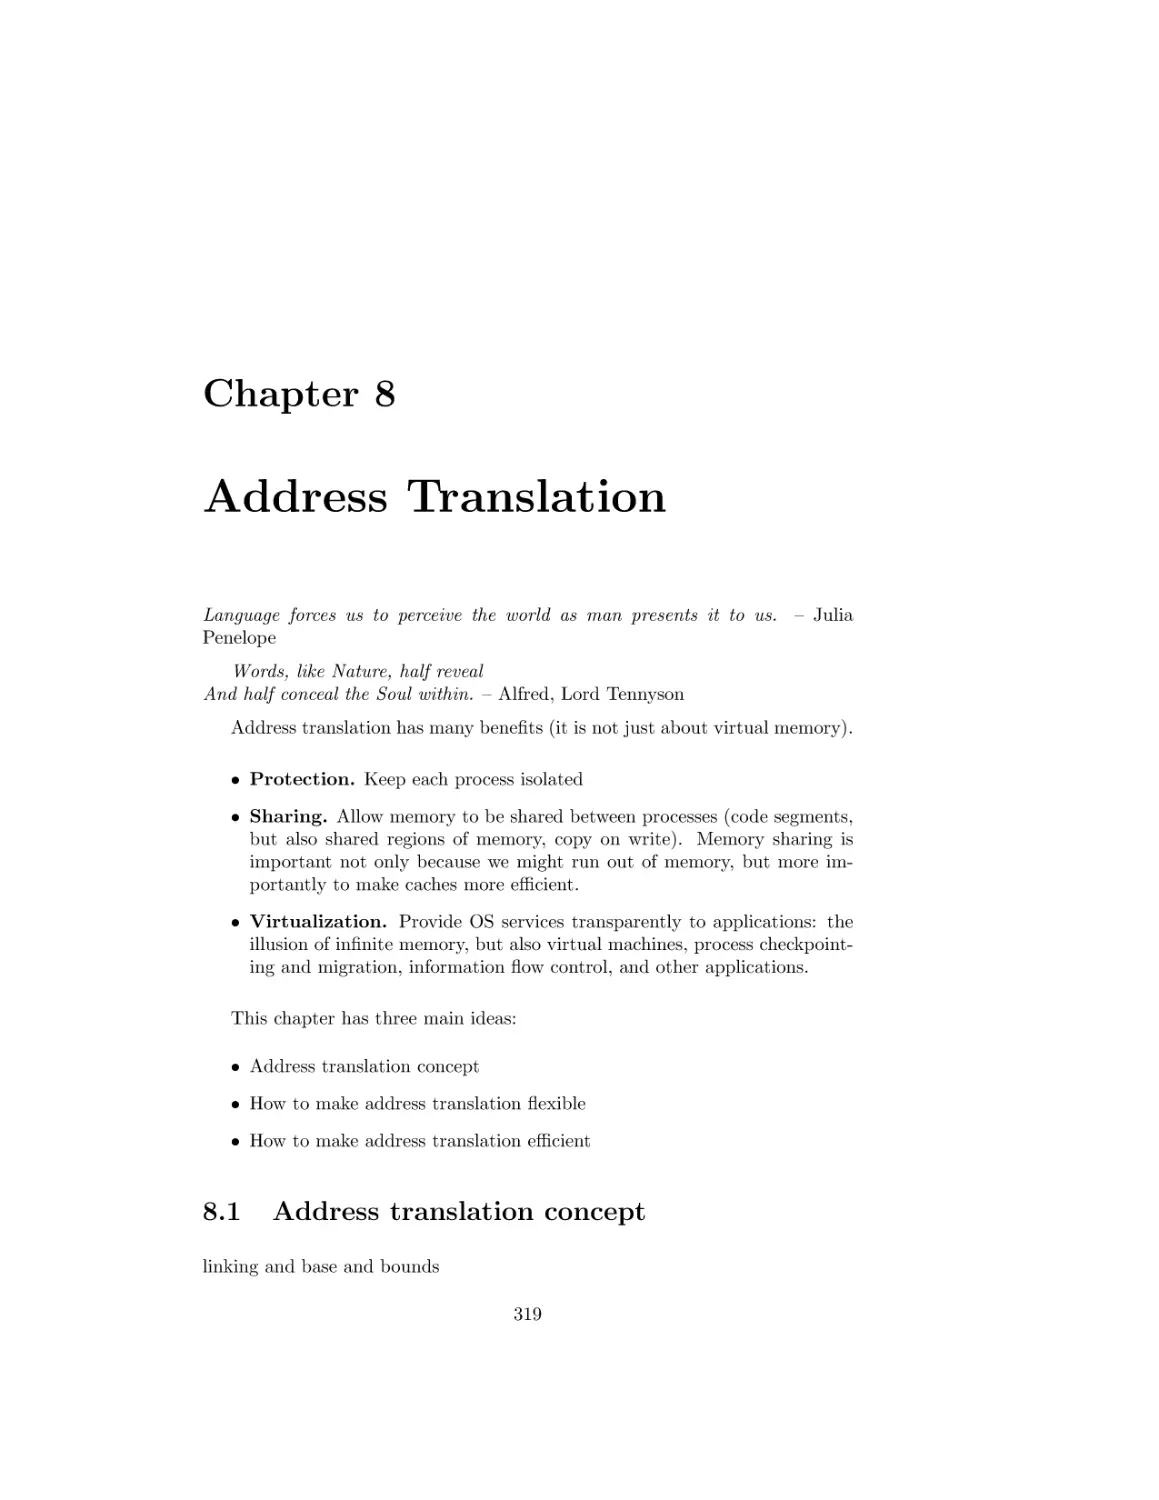 Address Translation
Address translation concept